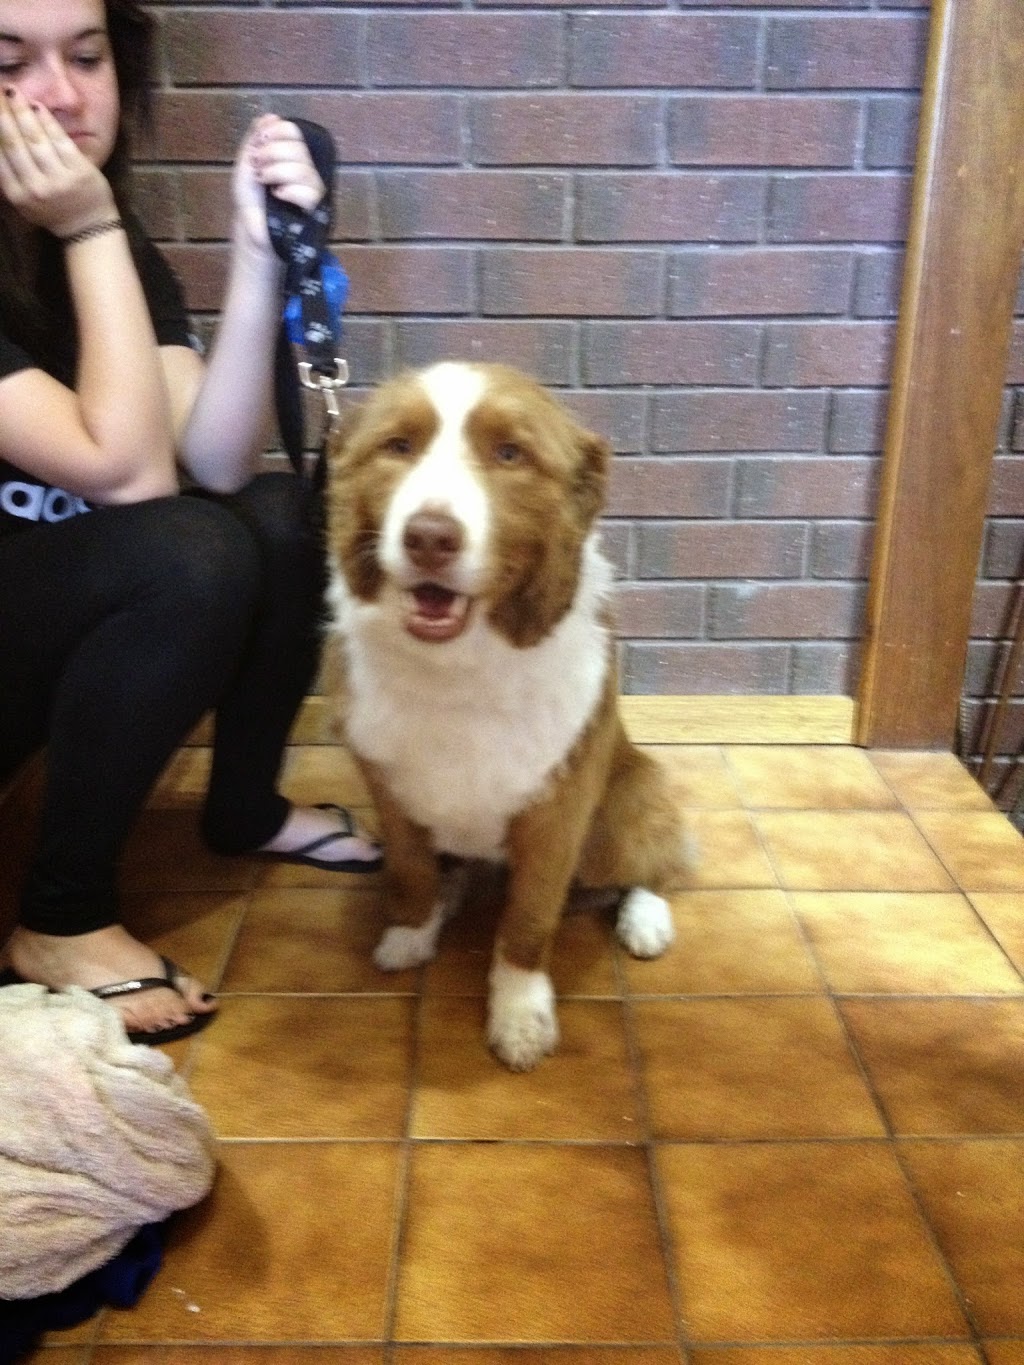 Shaggy Business Professional Dog Grooming | 6 Bayvue Cl, Carrickalinga SA 5204, Australia | Phone: 0402 781 548